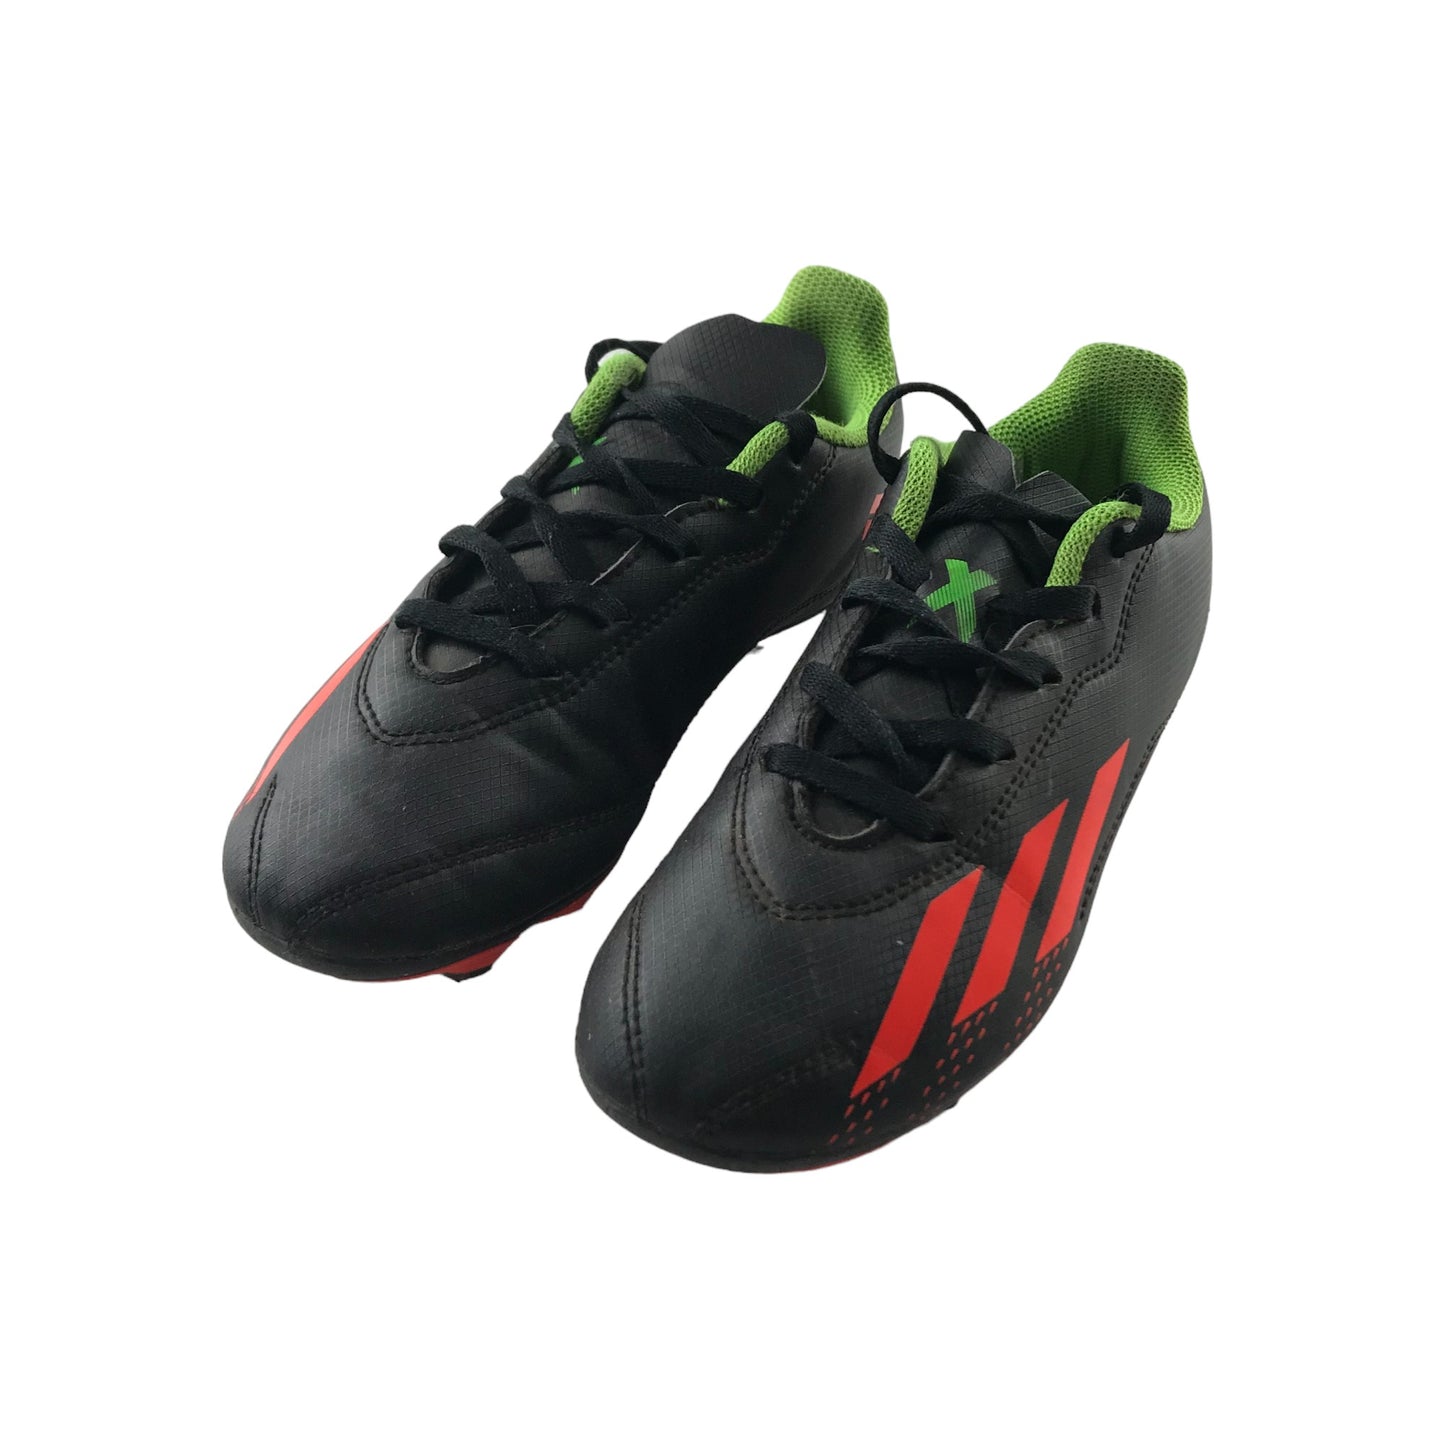 Adidas Football Boots Shoe Size 13k Junior Plastic Studs Orange Adidas Logo